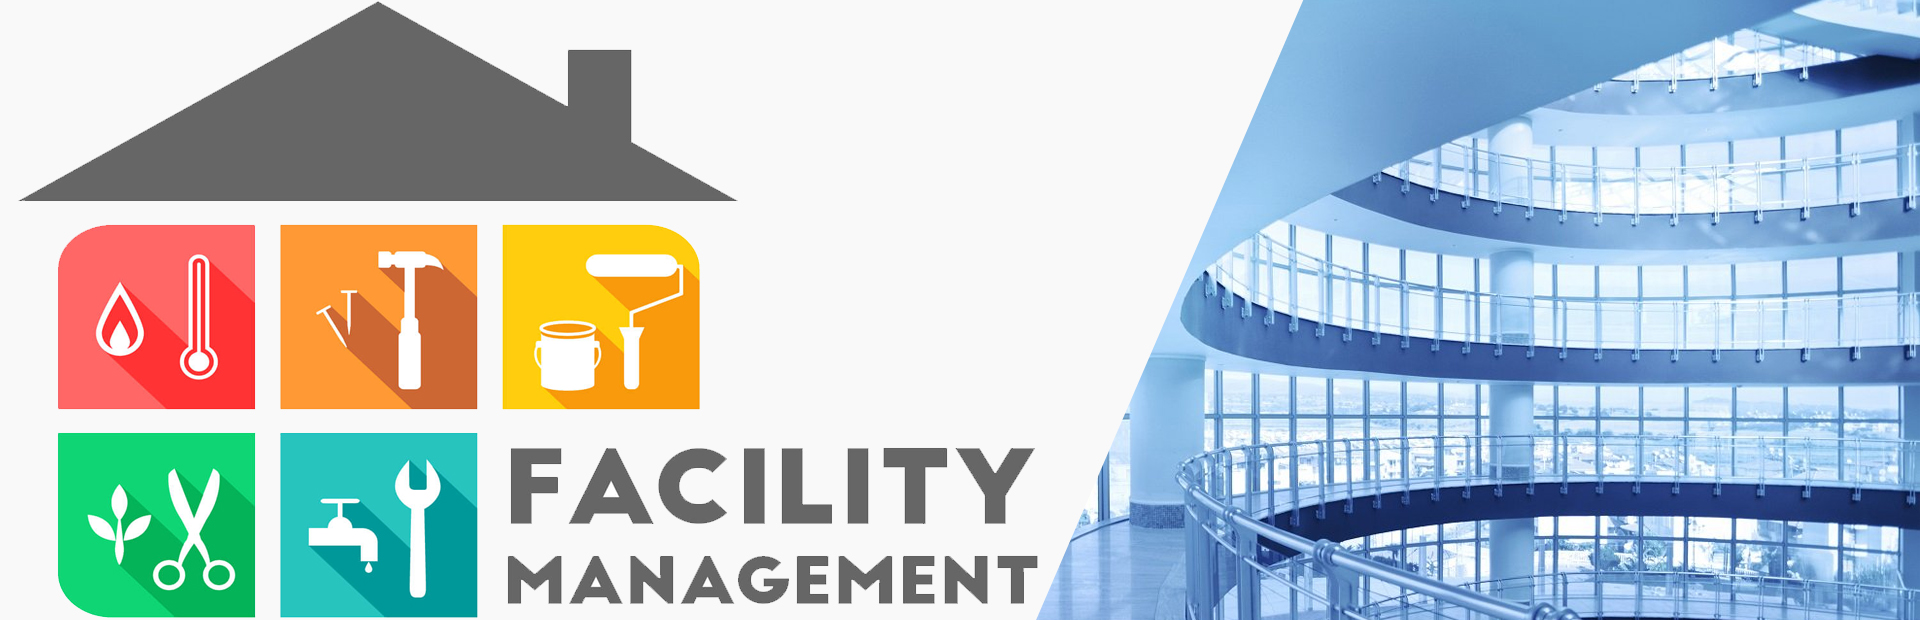 Facility_management_service